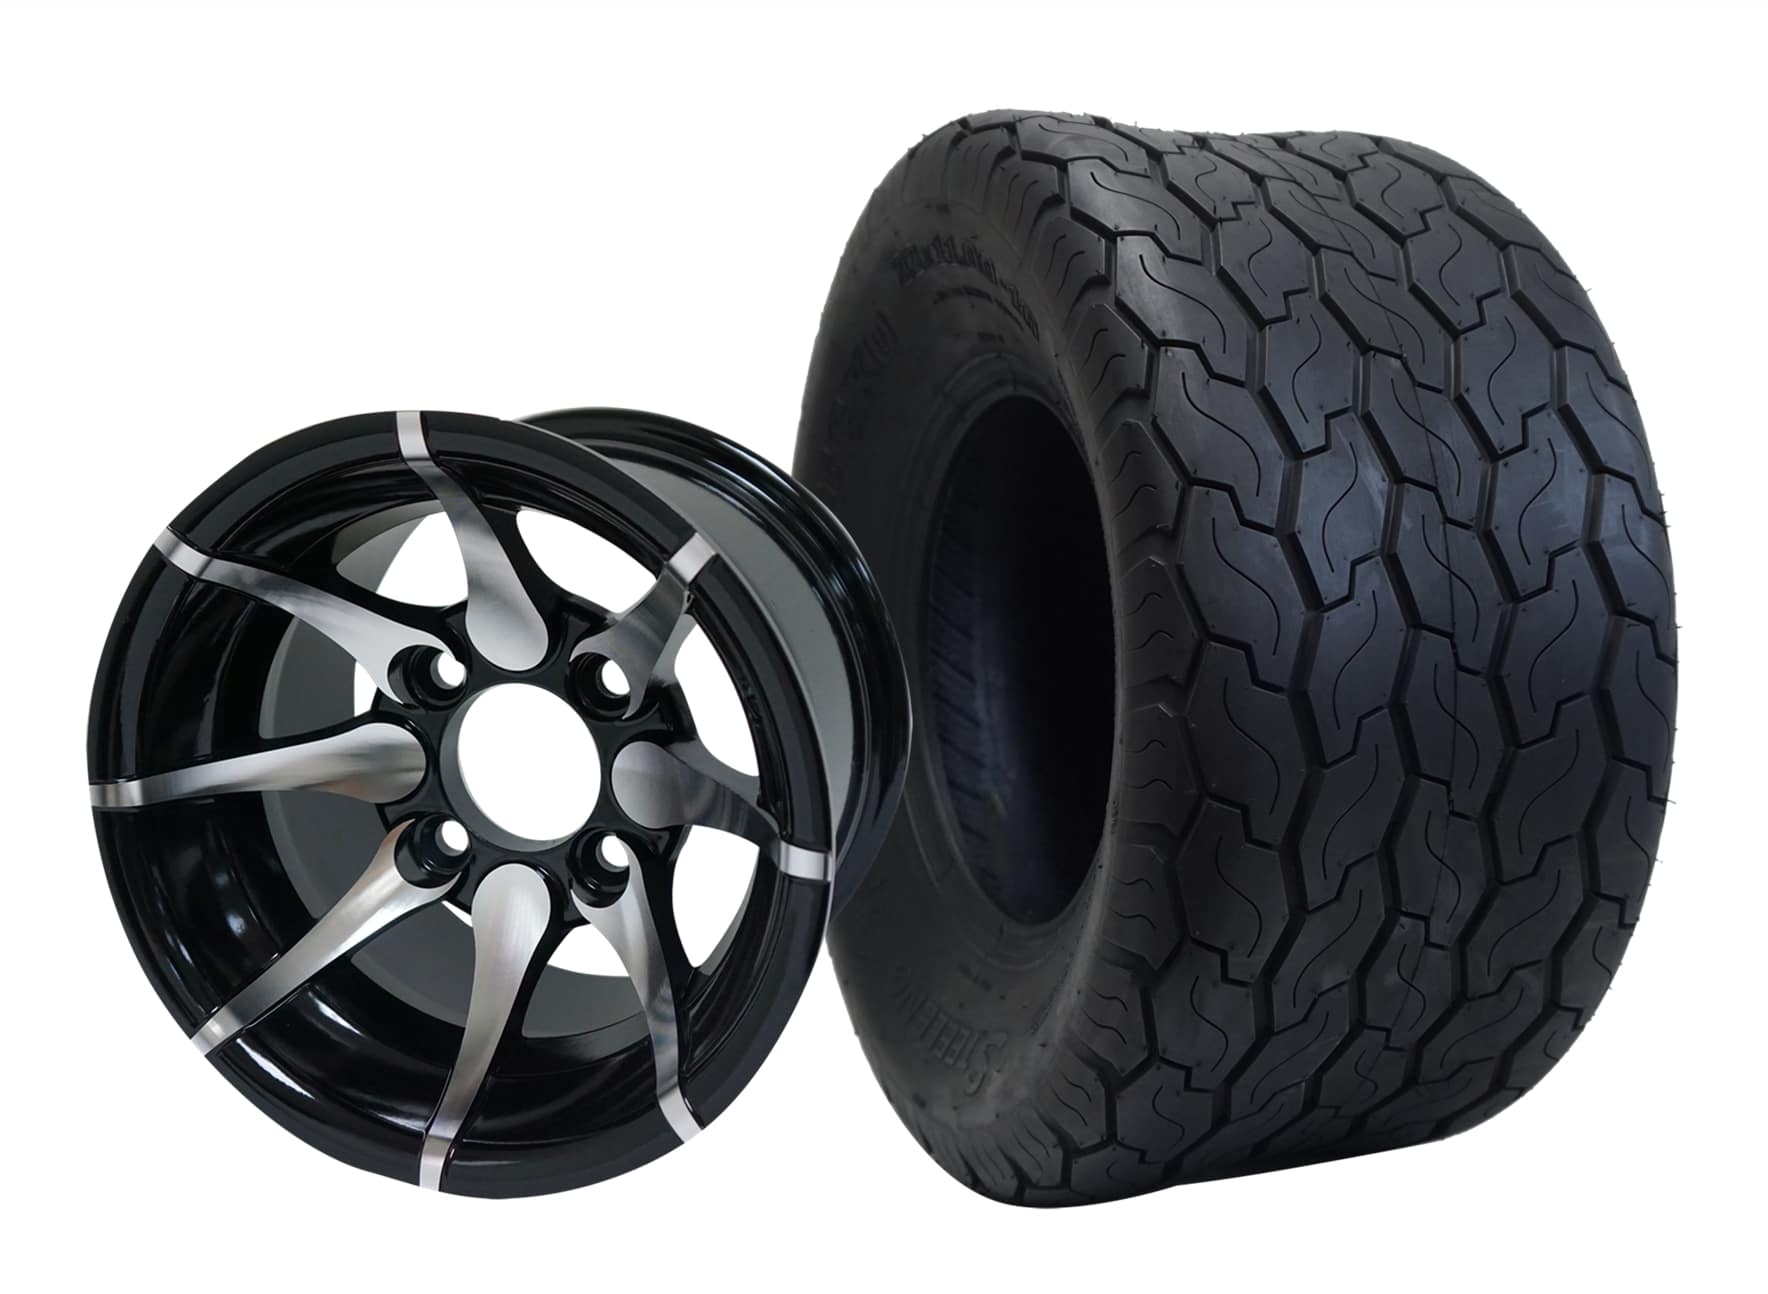 10" Kraken Machined Black Wheel Aluminum Alloy & 18"x9"-10" Gecko All Terrain Tire x4